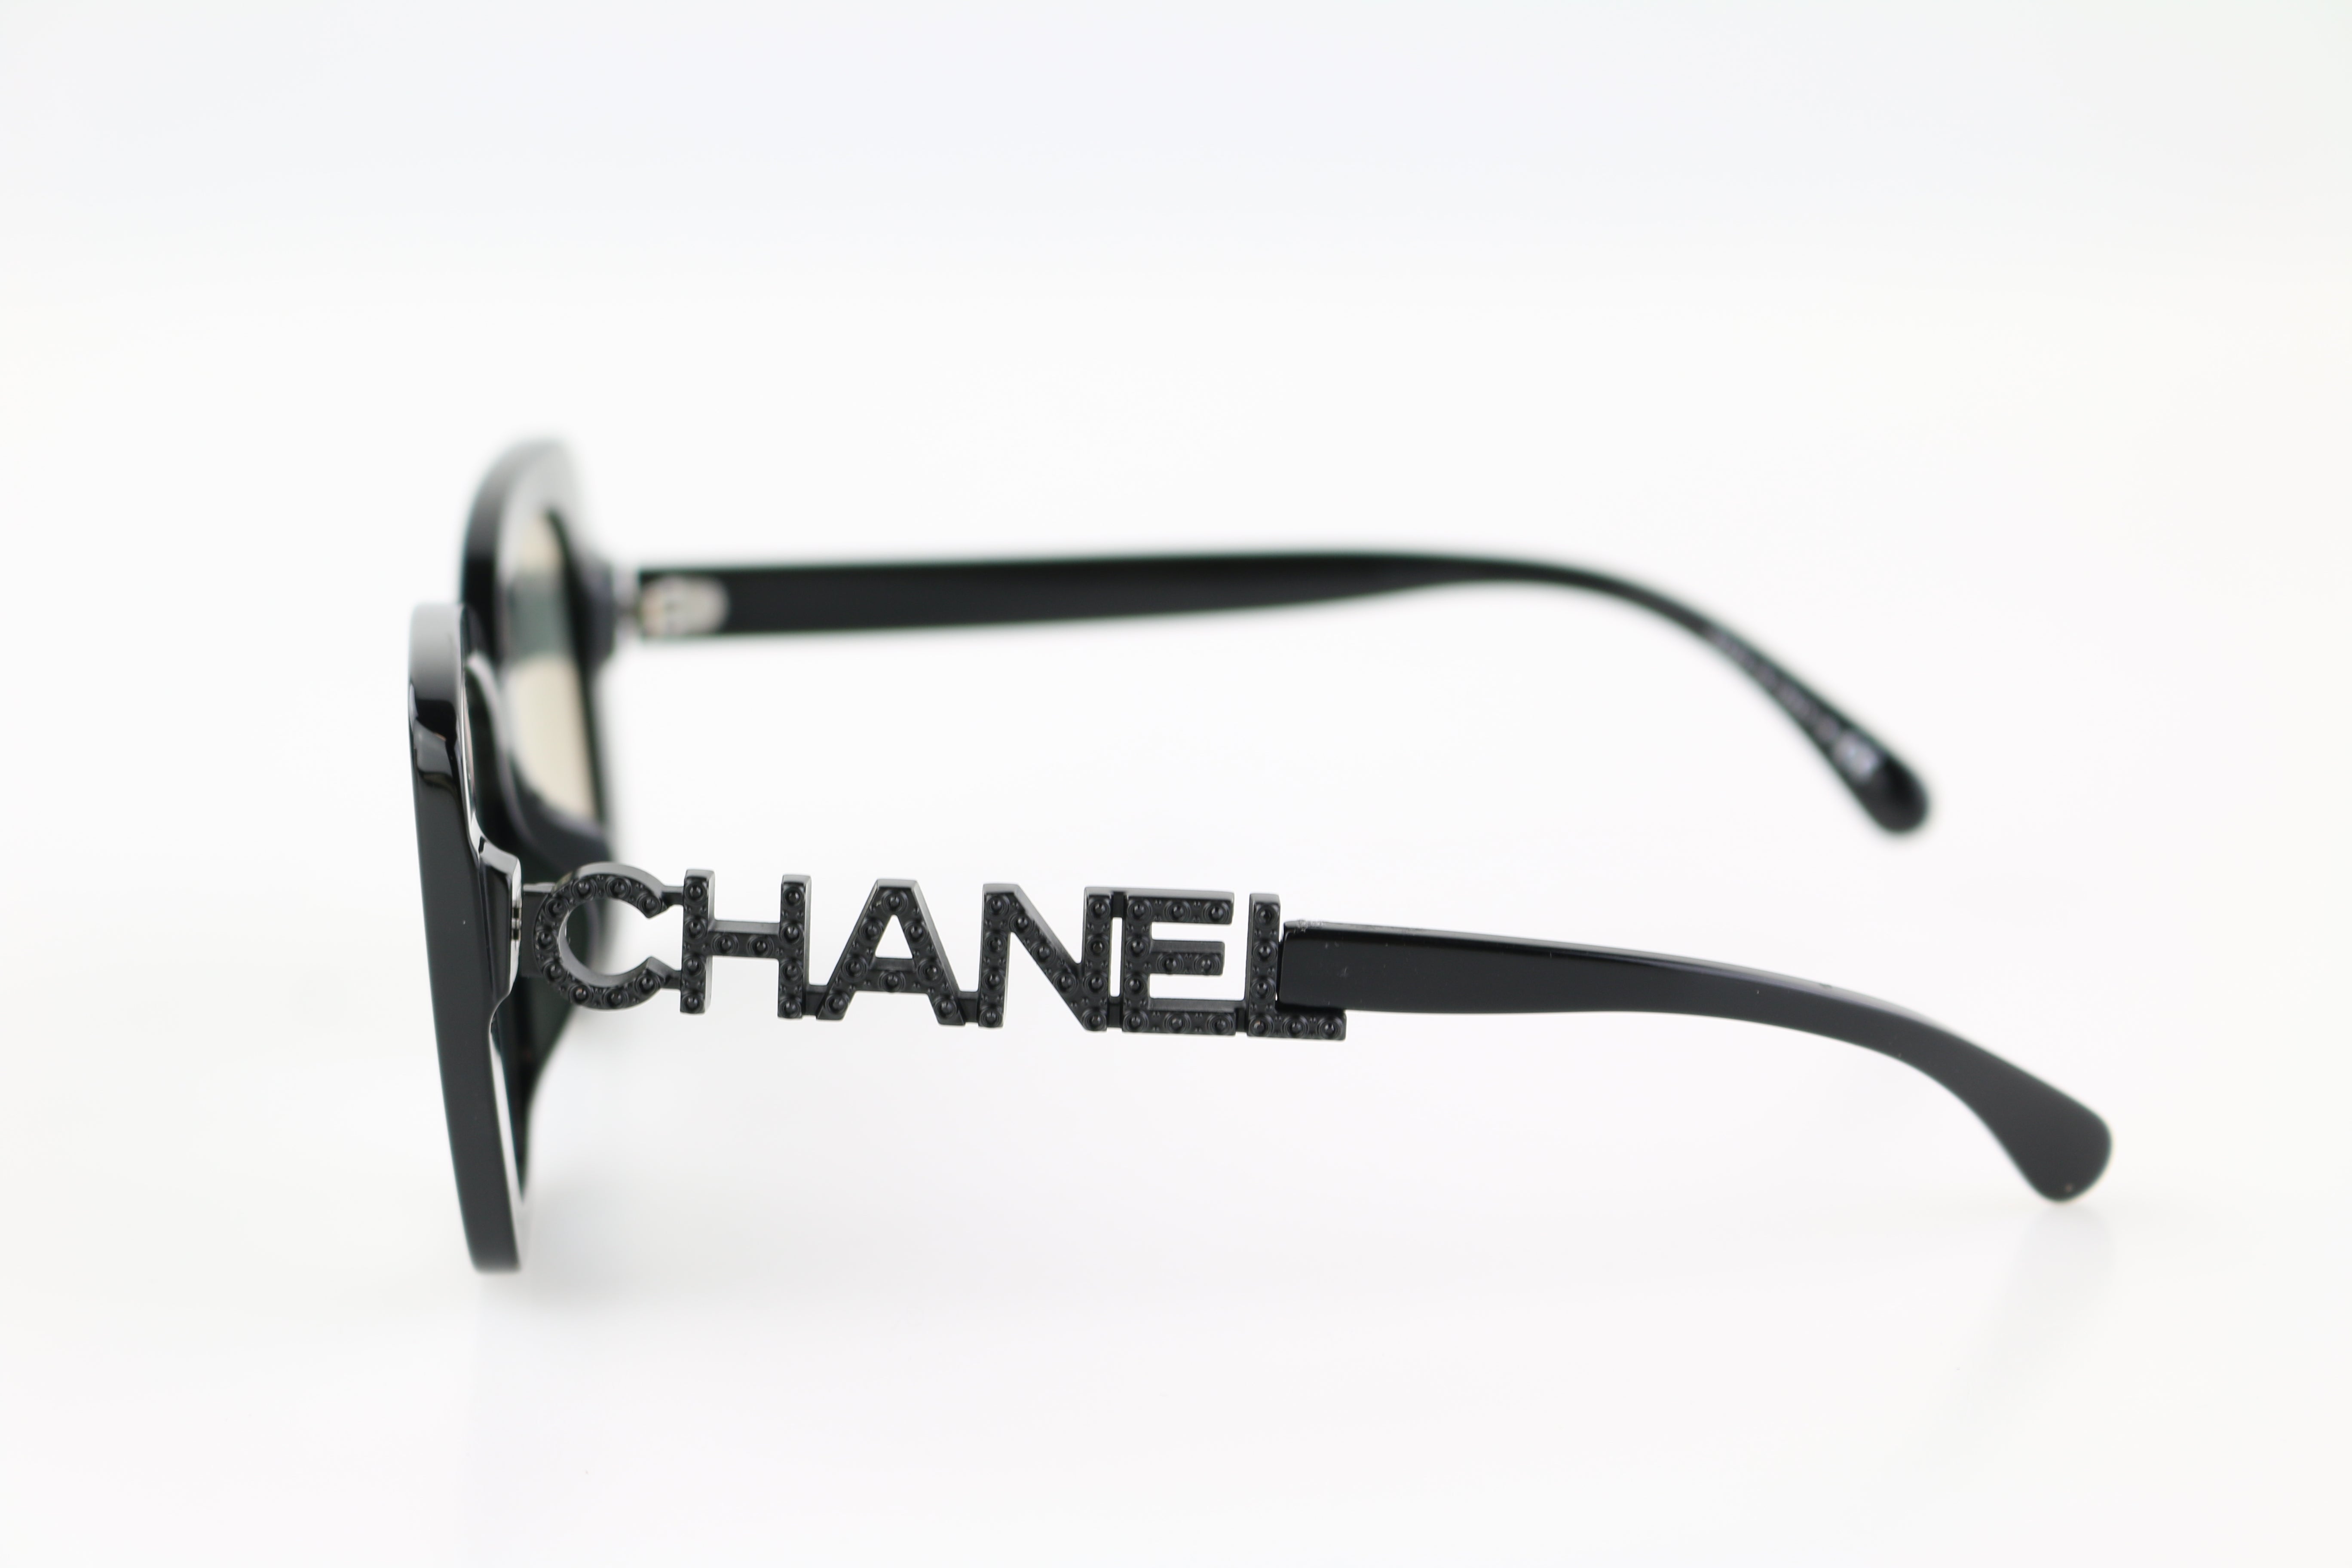 Black Acetate/Strass Square Polarized Sunglasses